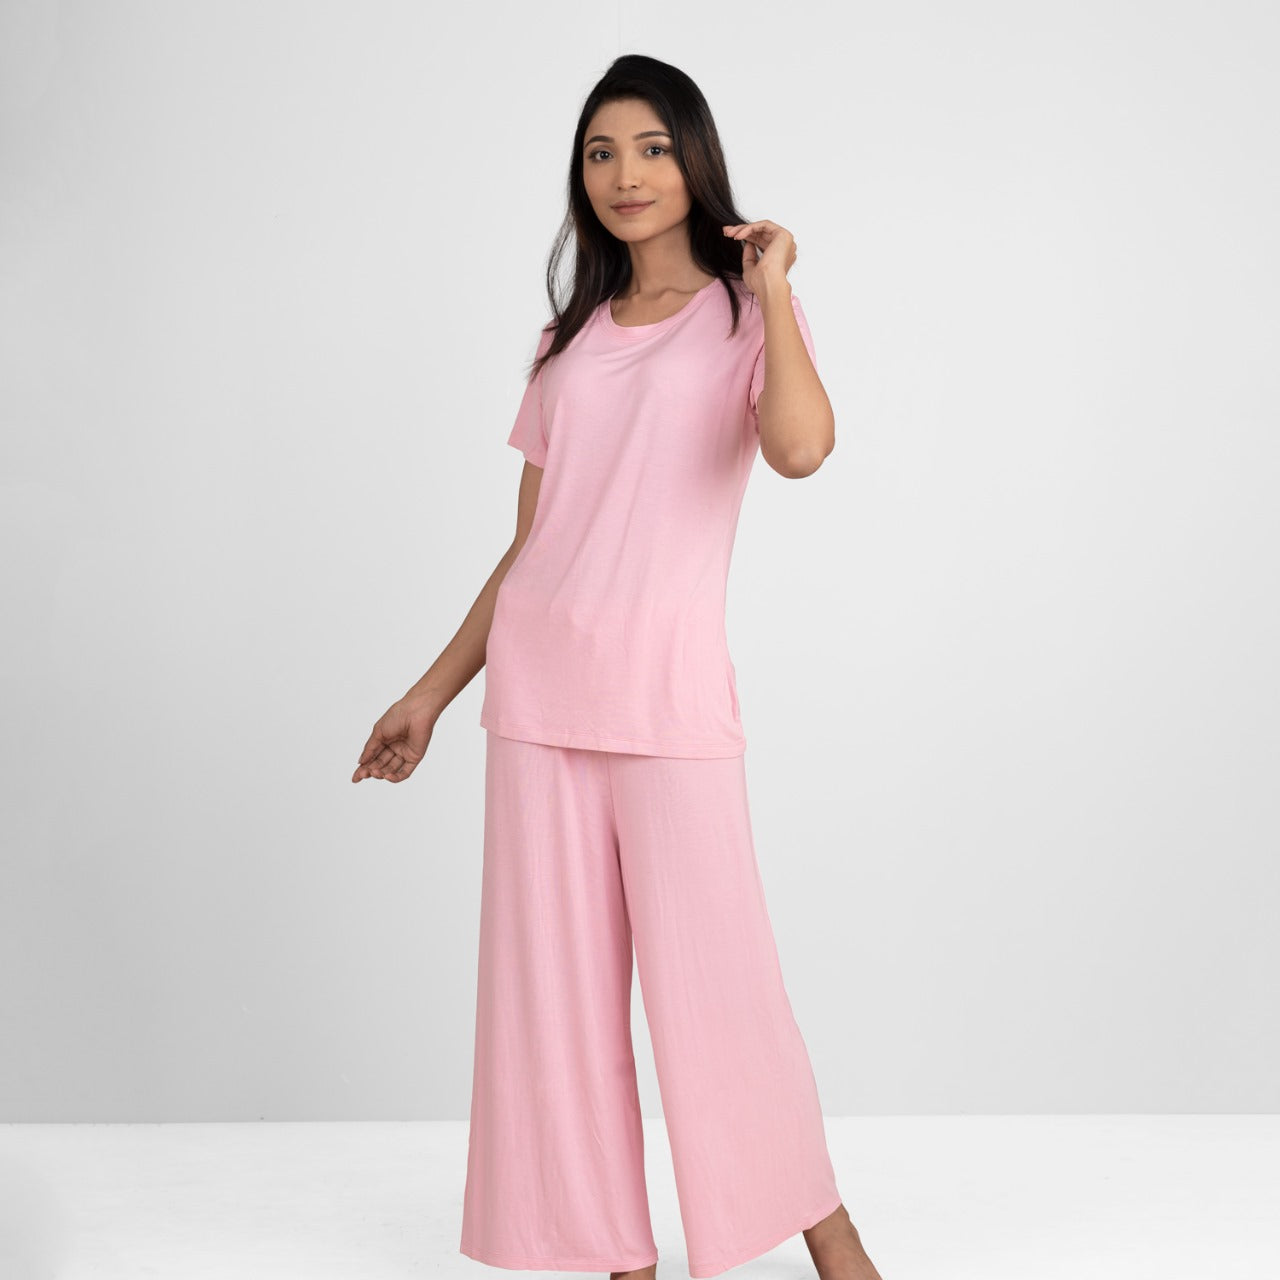 Women's Silky Cotton Sleepwear Set (Light Pink)